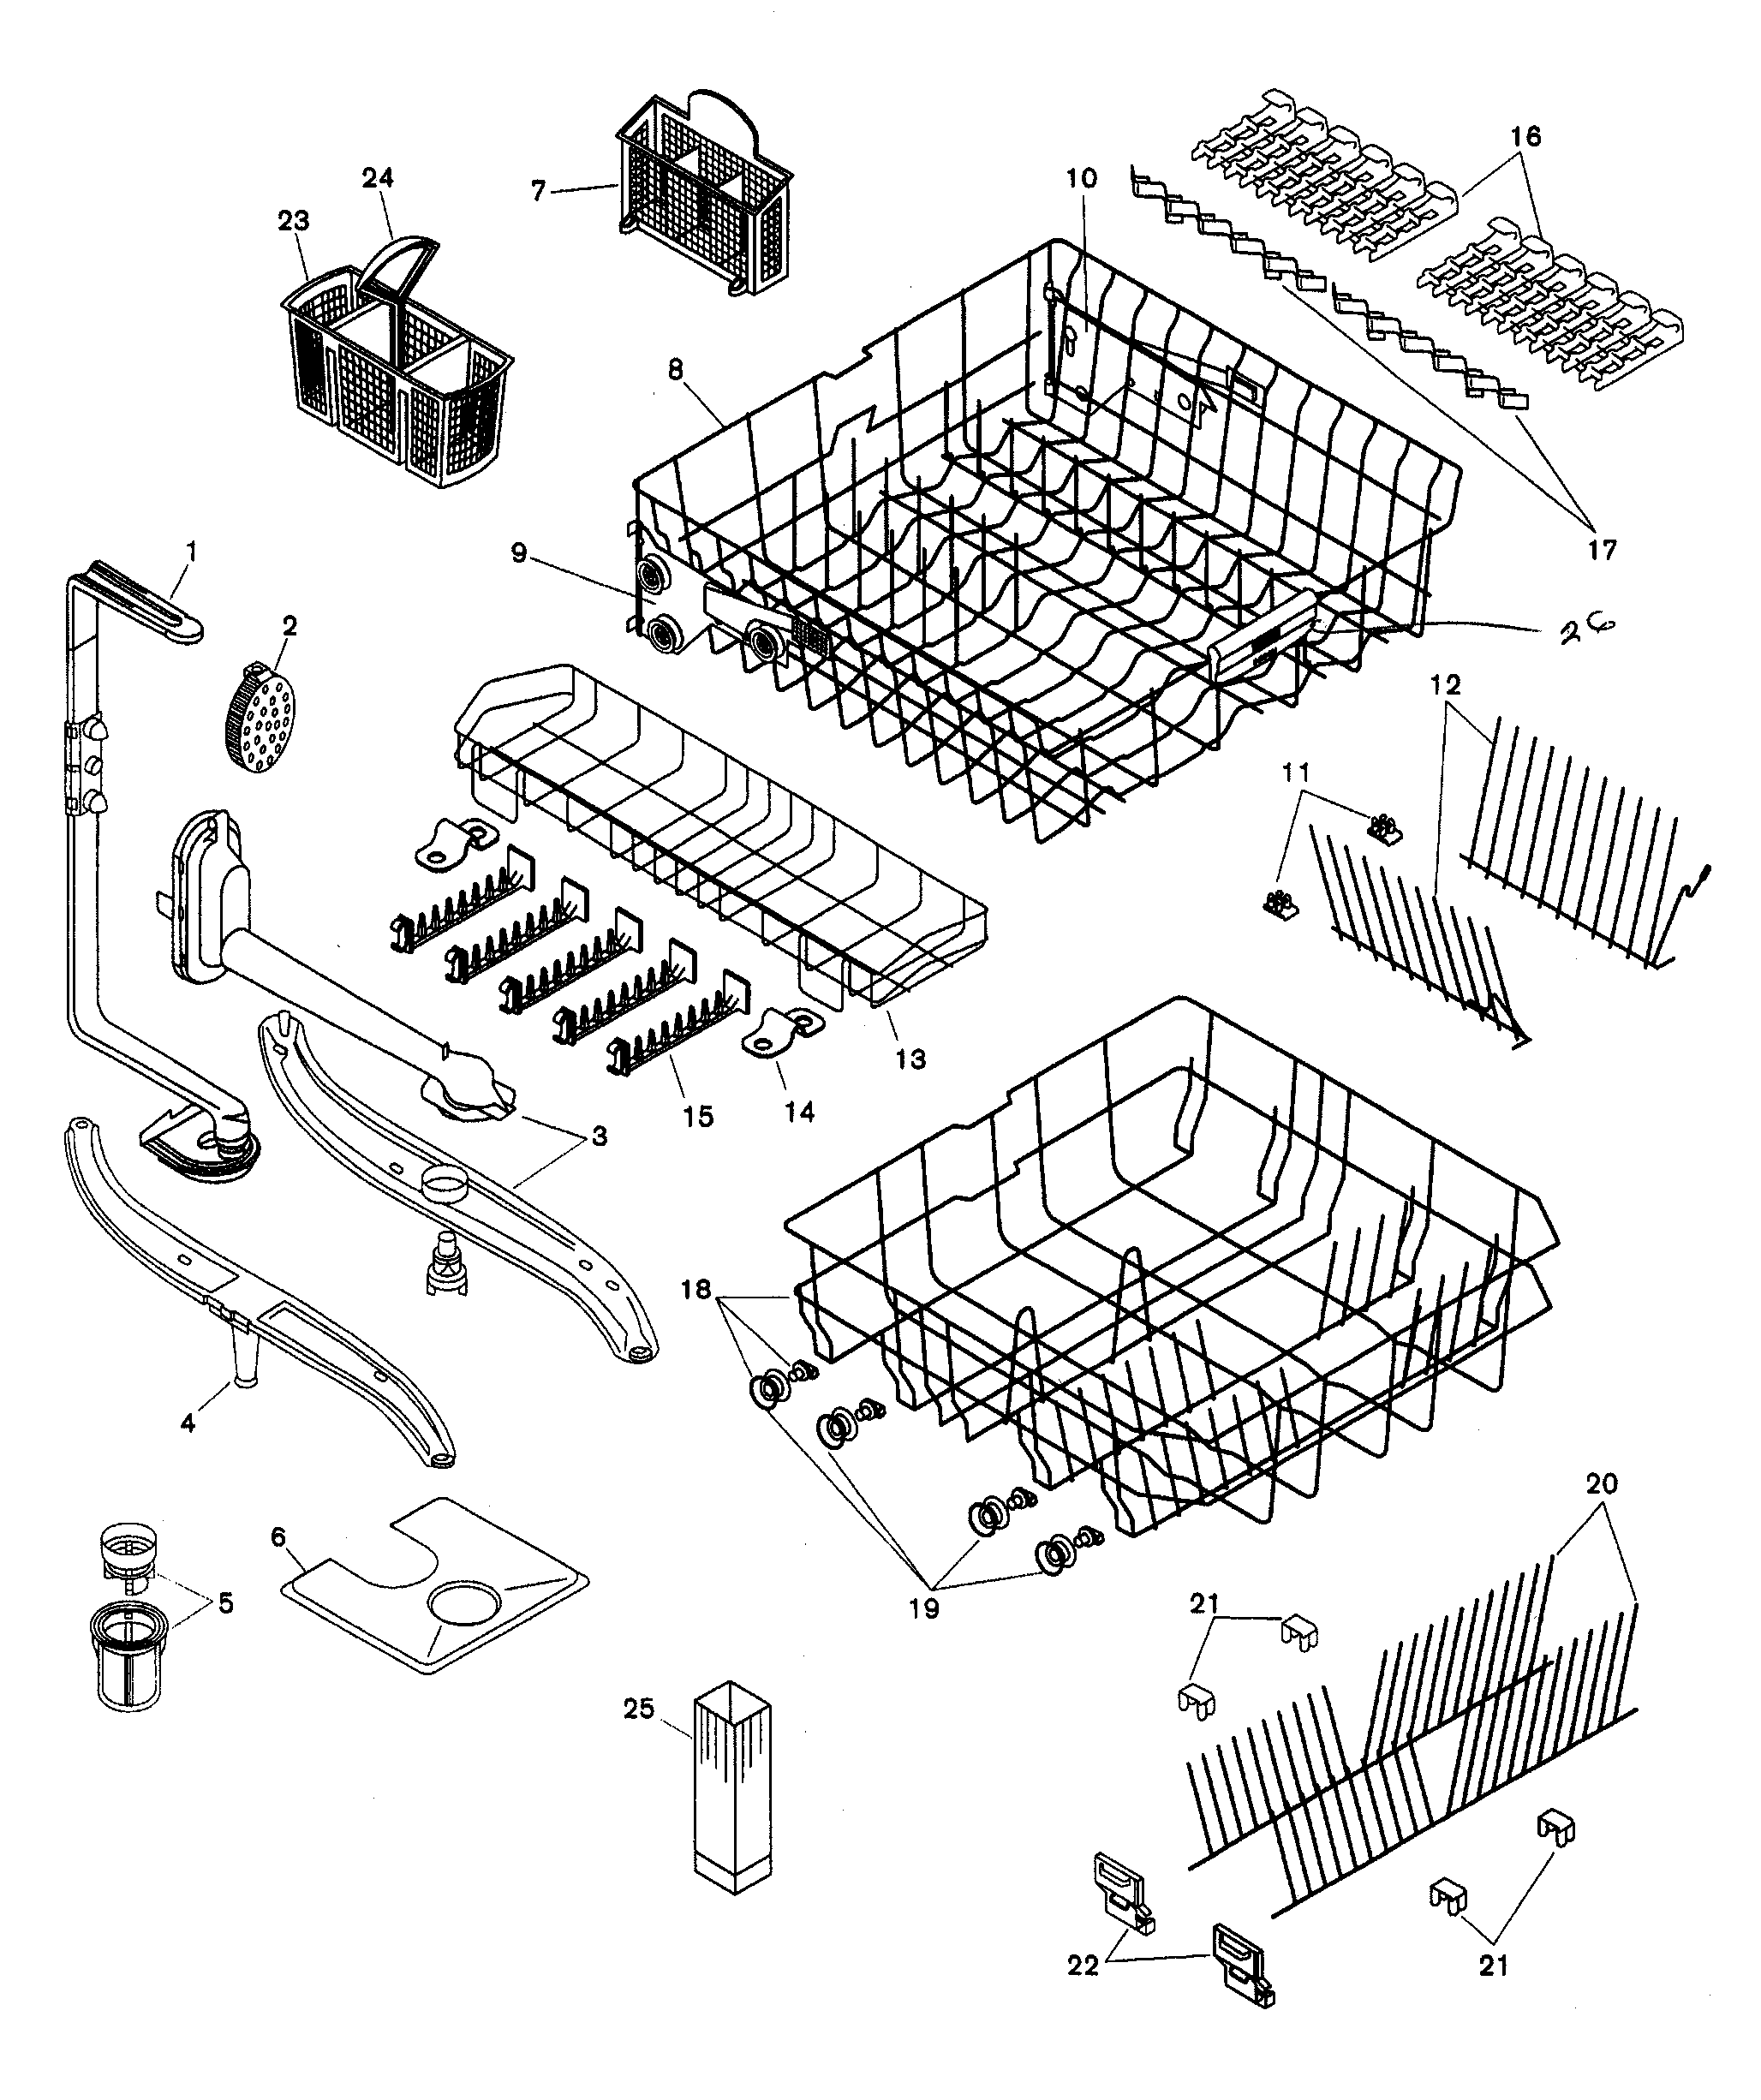 32 Kenmore Dishwasher 665 Parts Diagram Wiring Diagram List